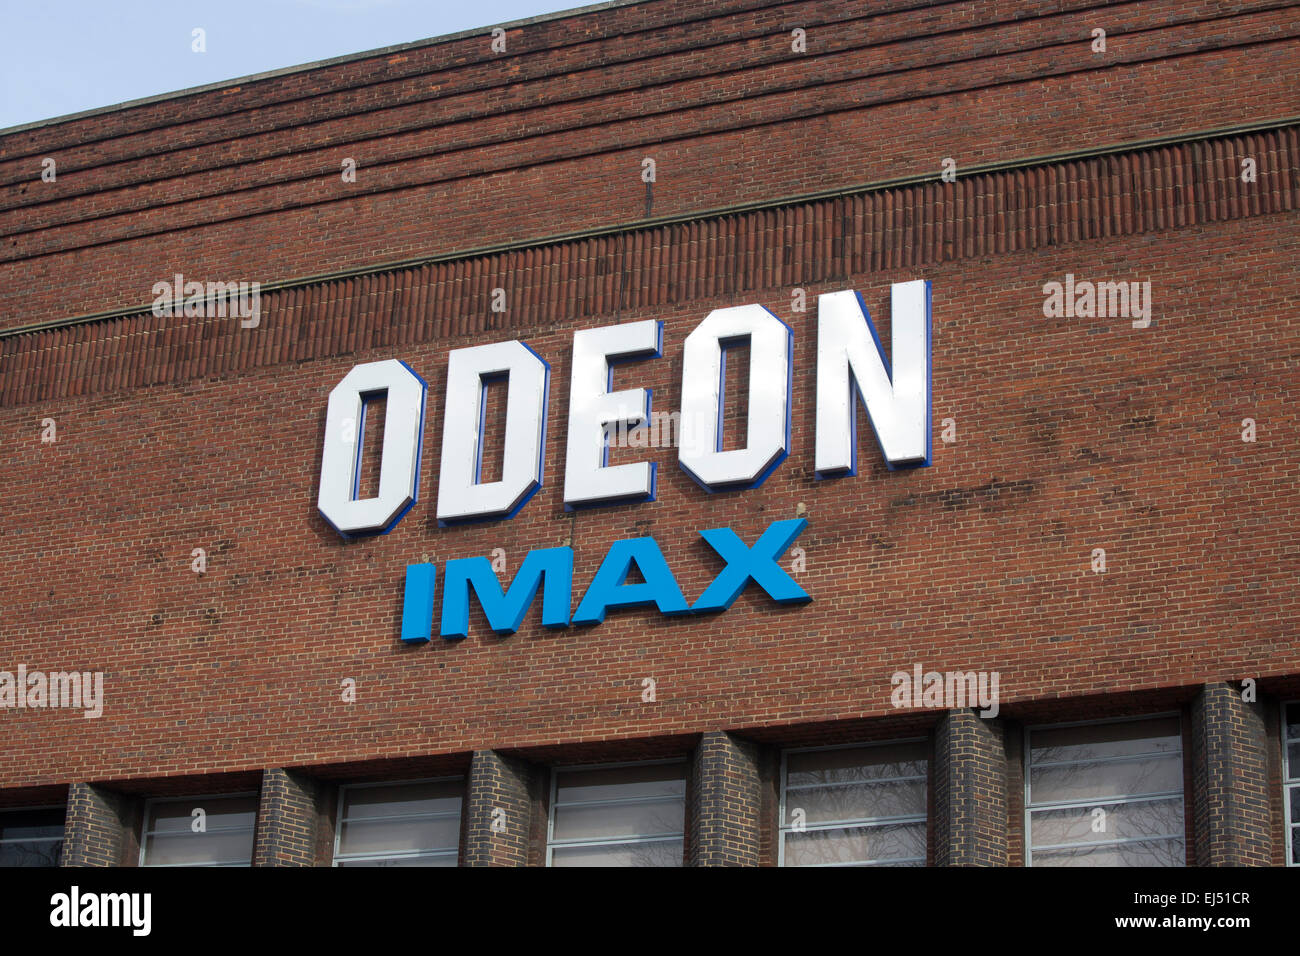 Odeon sign Swiss Cottage cinema film imax Stock Photo